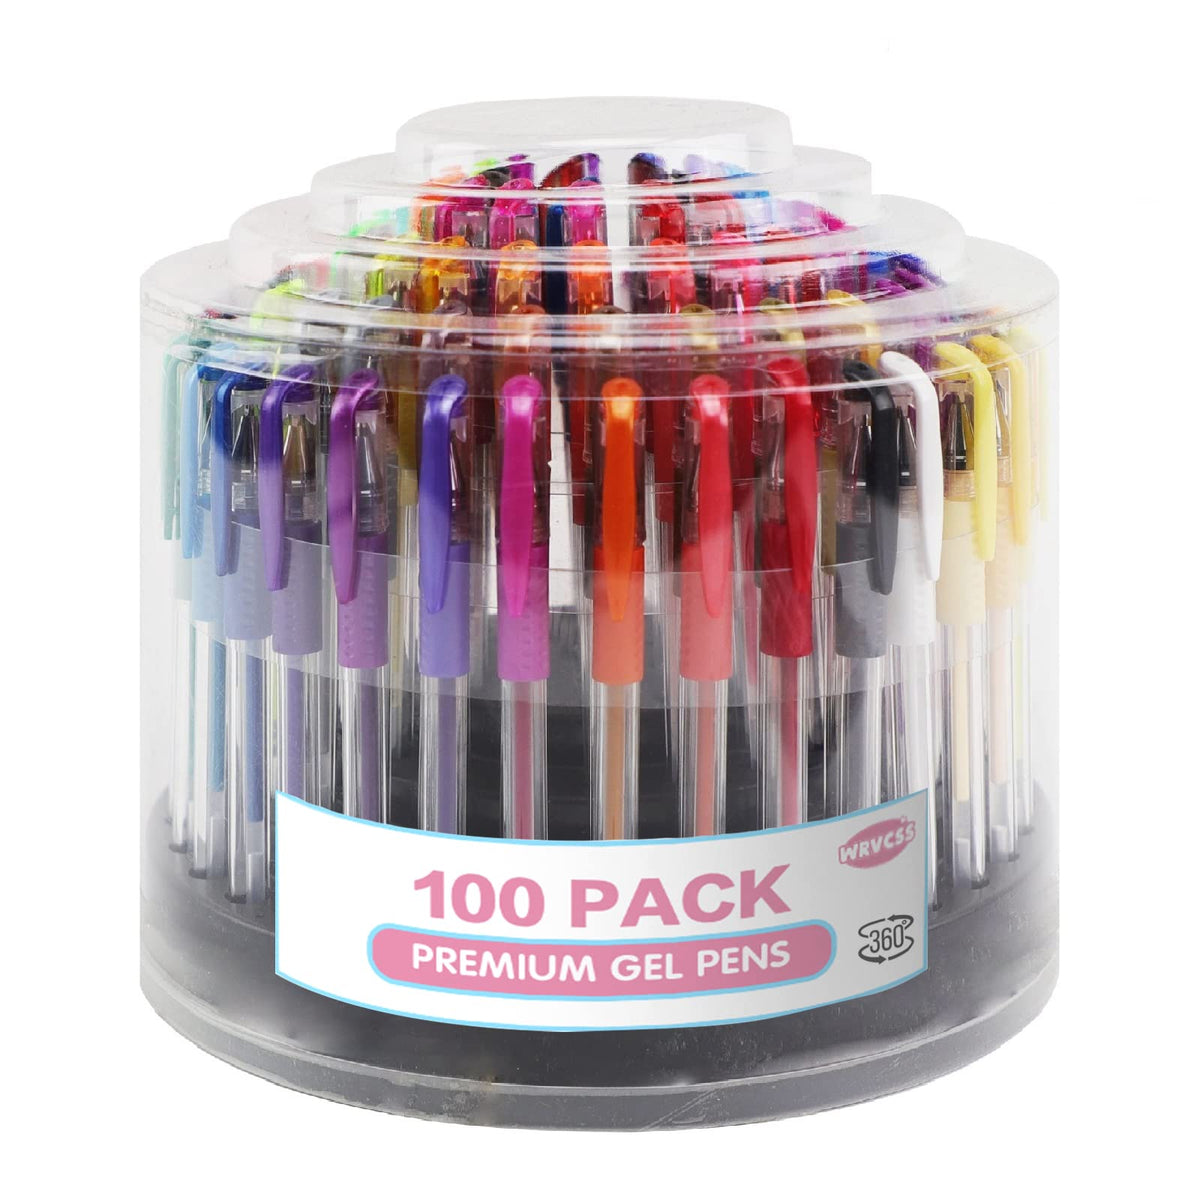 240 Colors Gel Pens Set, 40% More Ink Neon Glitter Coloring Pens